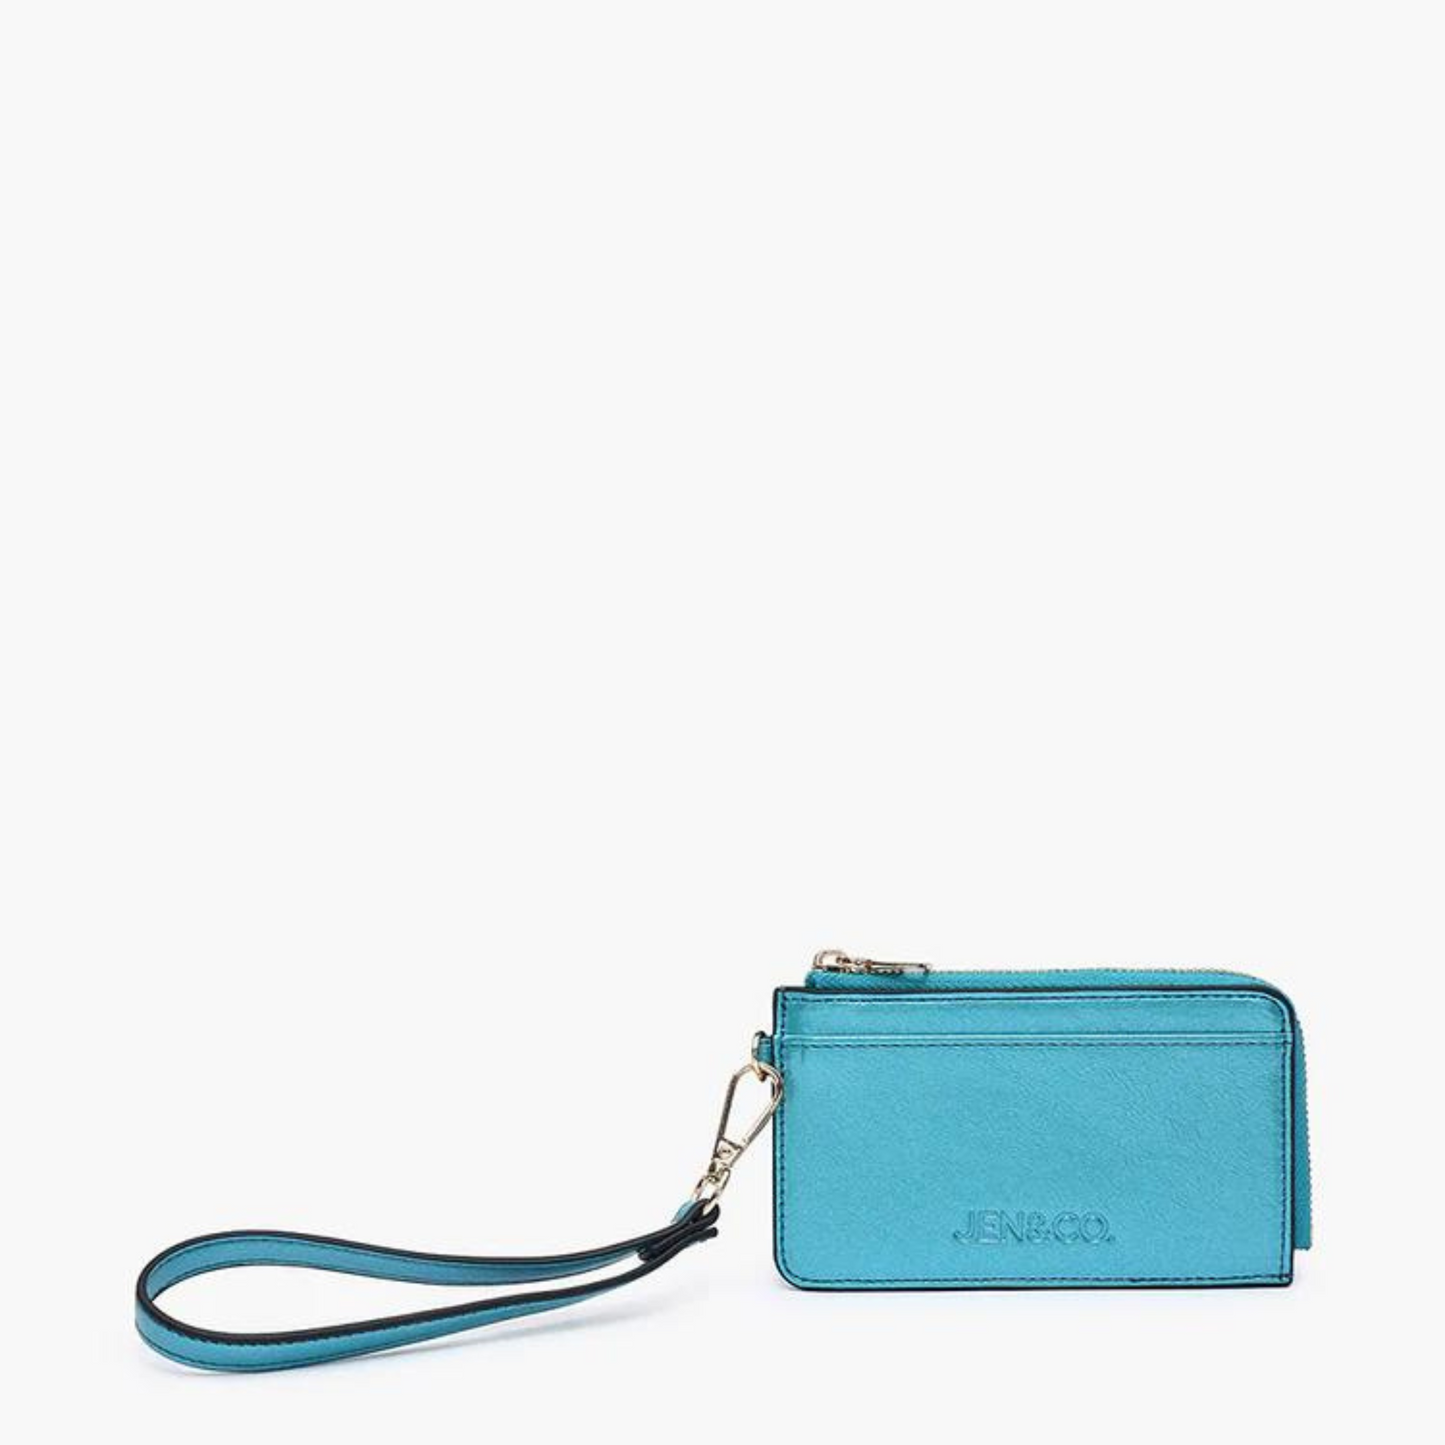 Annalise wallet in turquenite blue